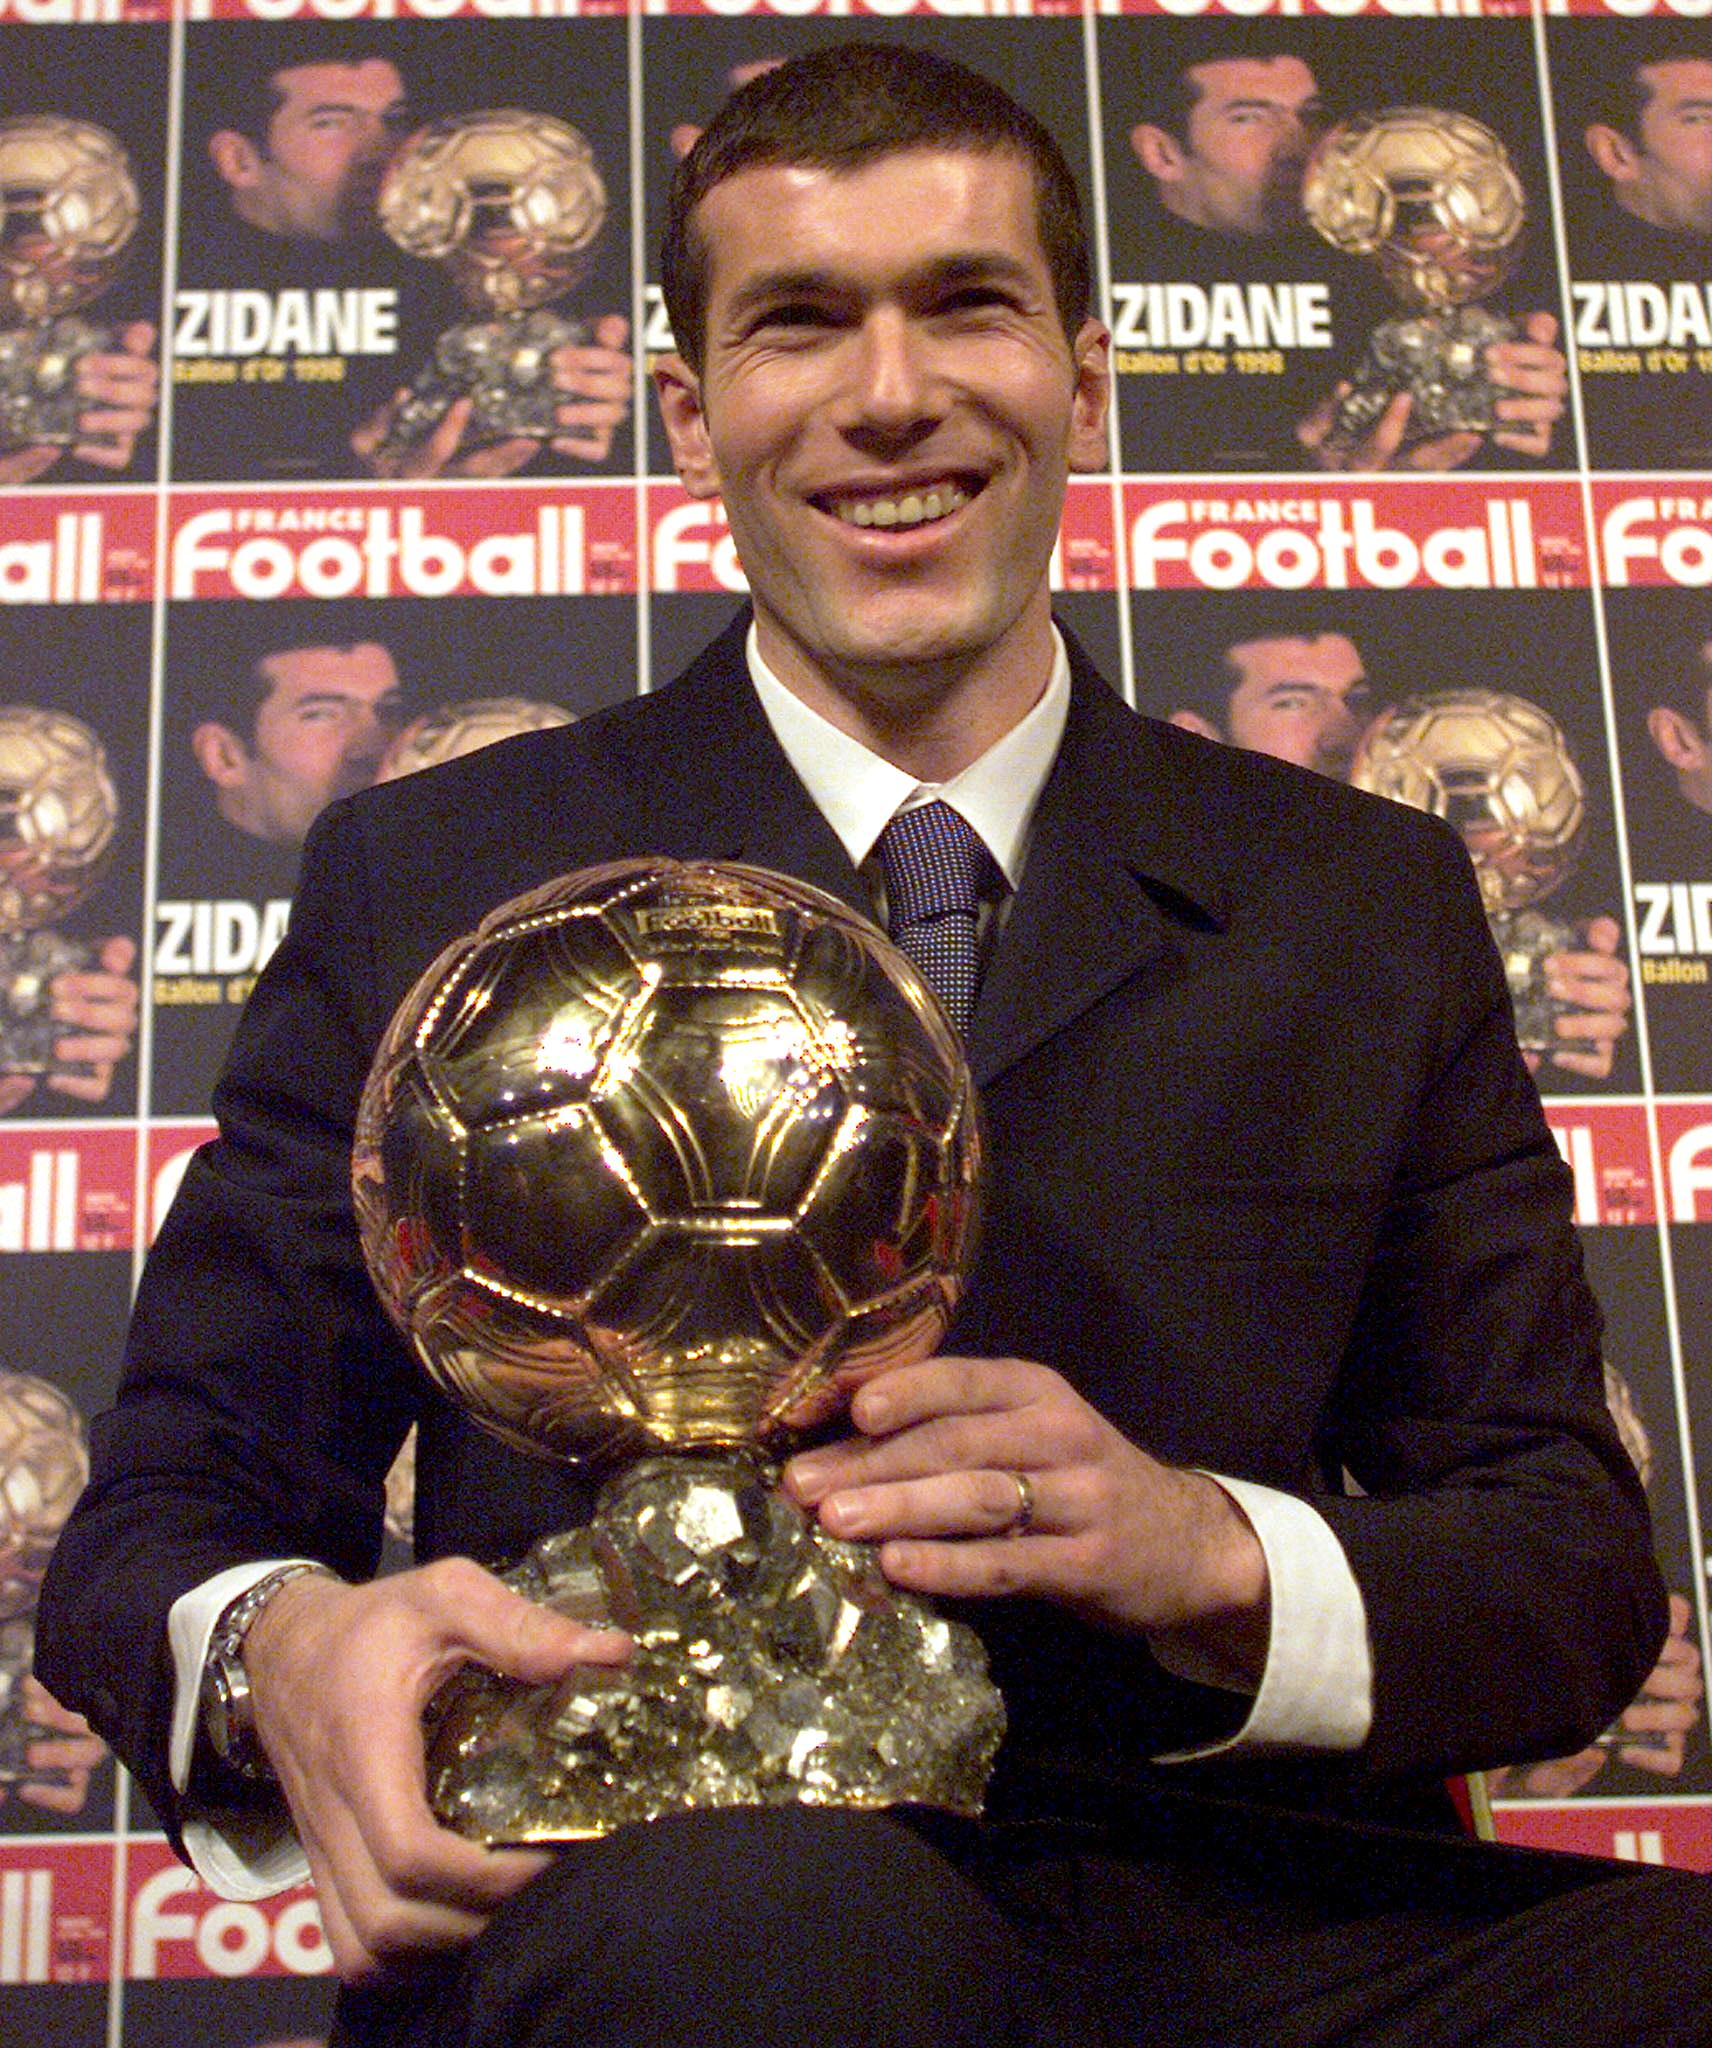 Zinedine Zidane's net worth is reportedly £52million